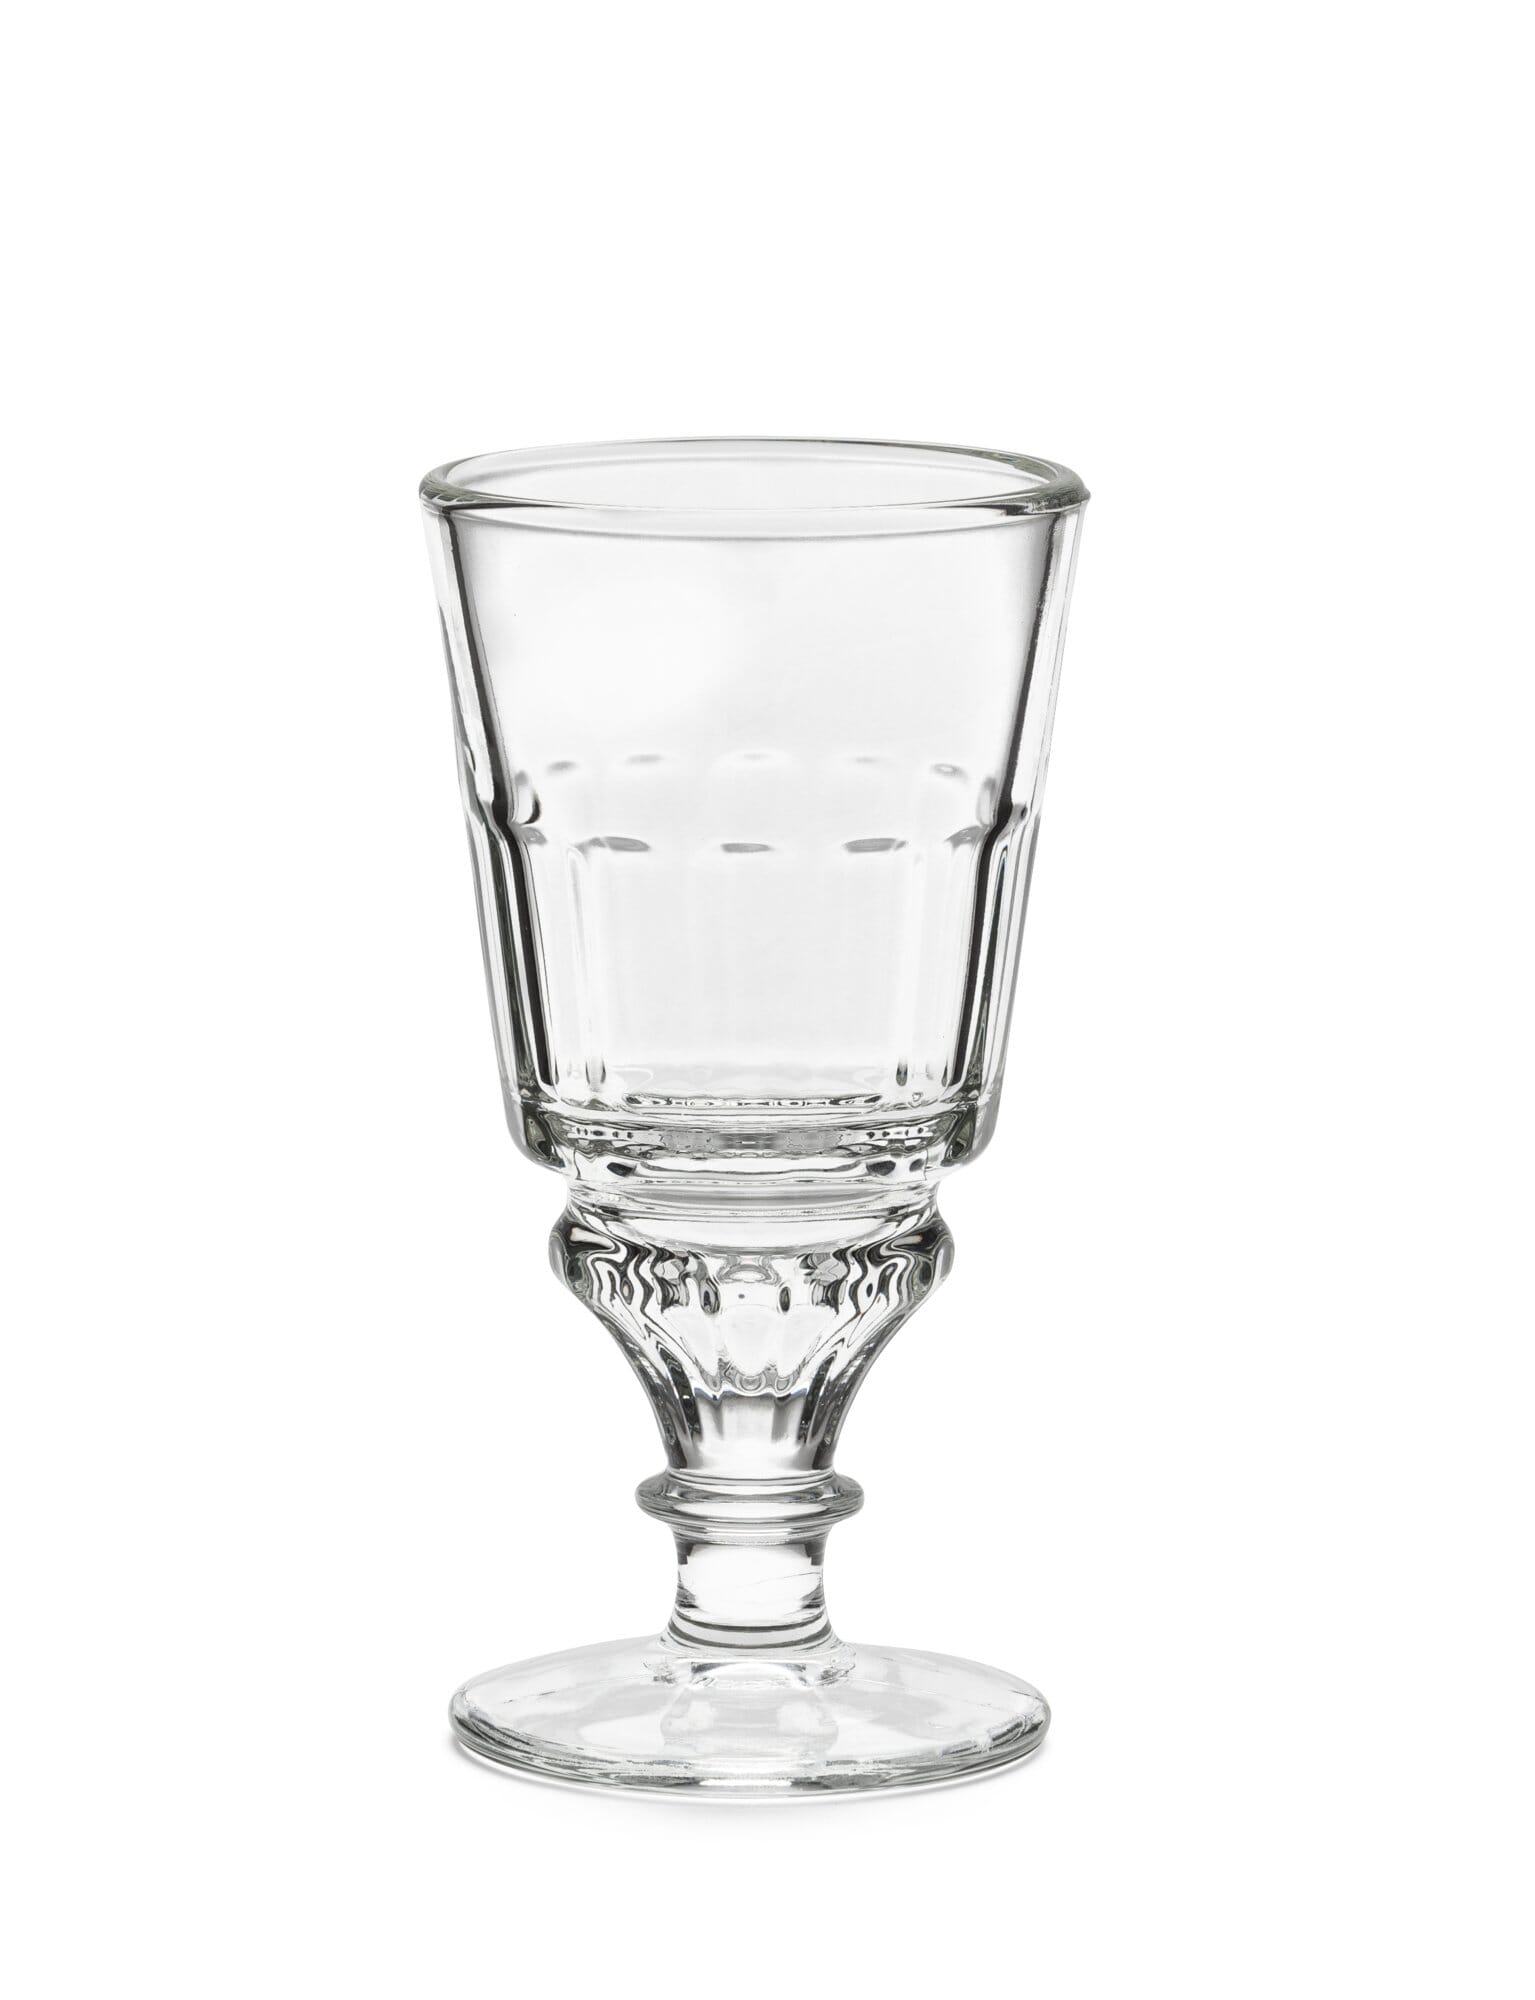 La Rochère glass | Manufactum